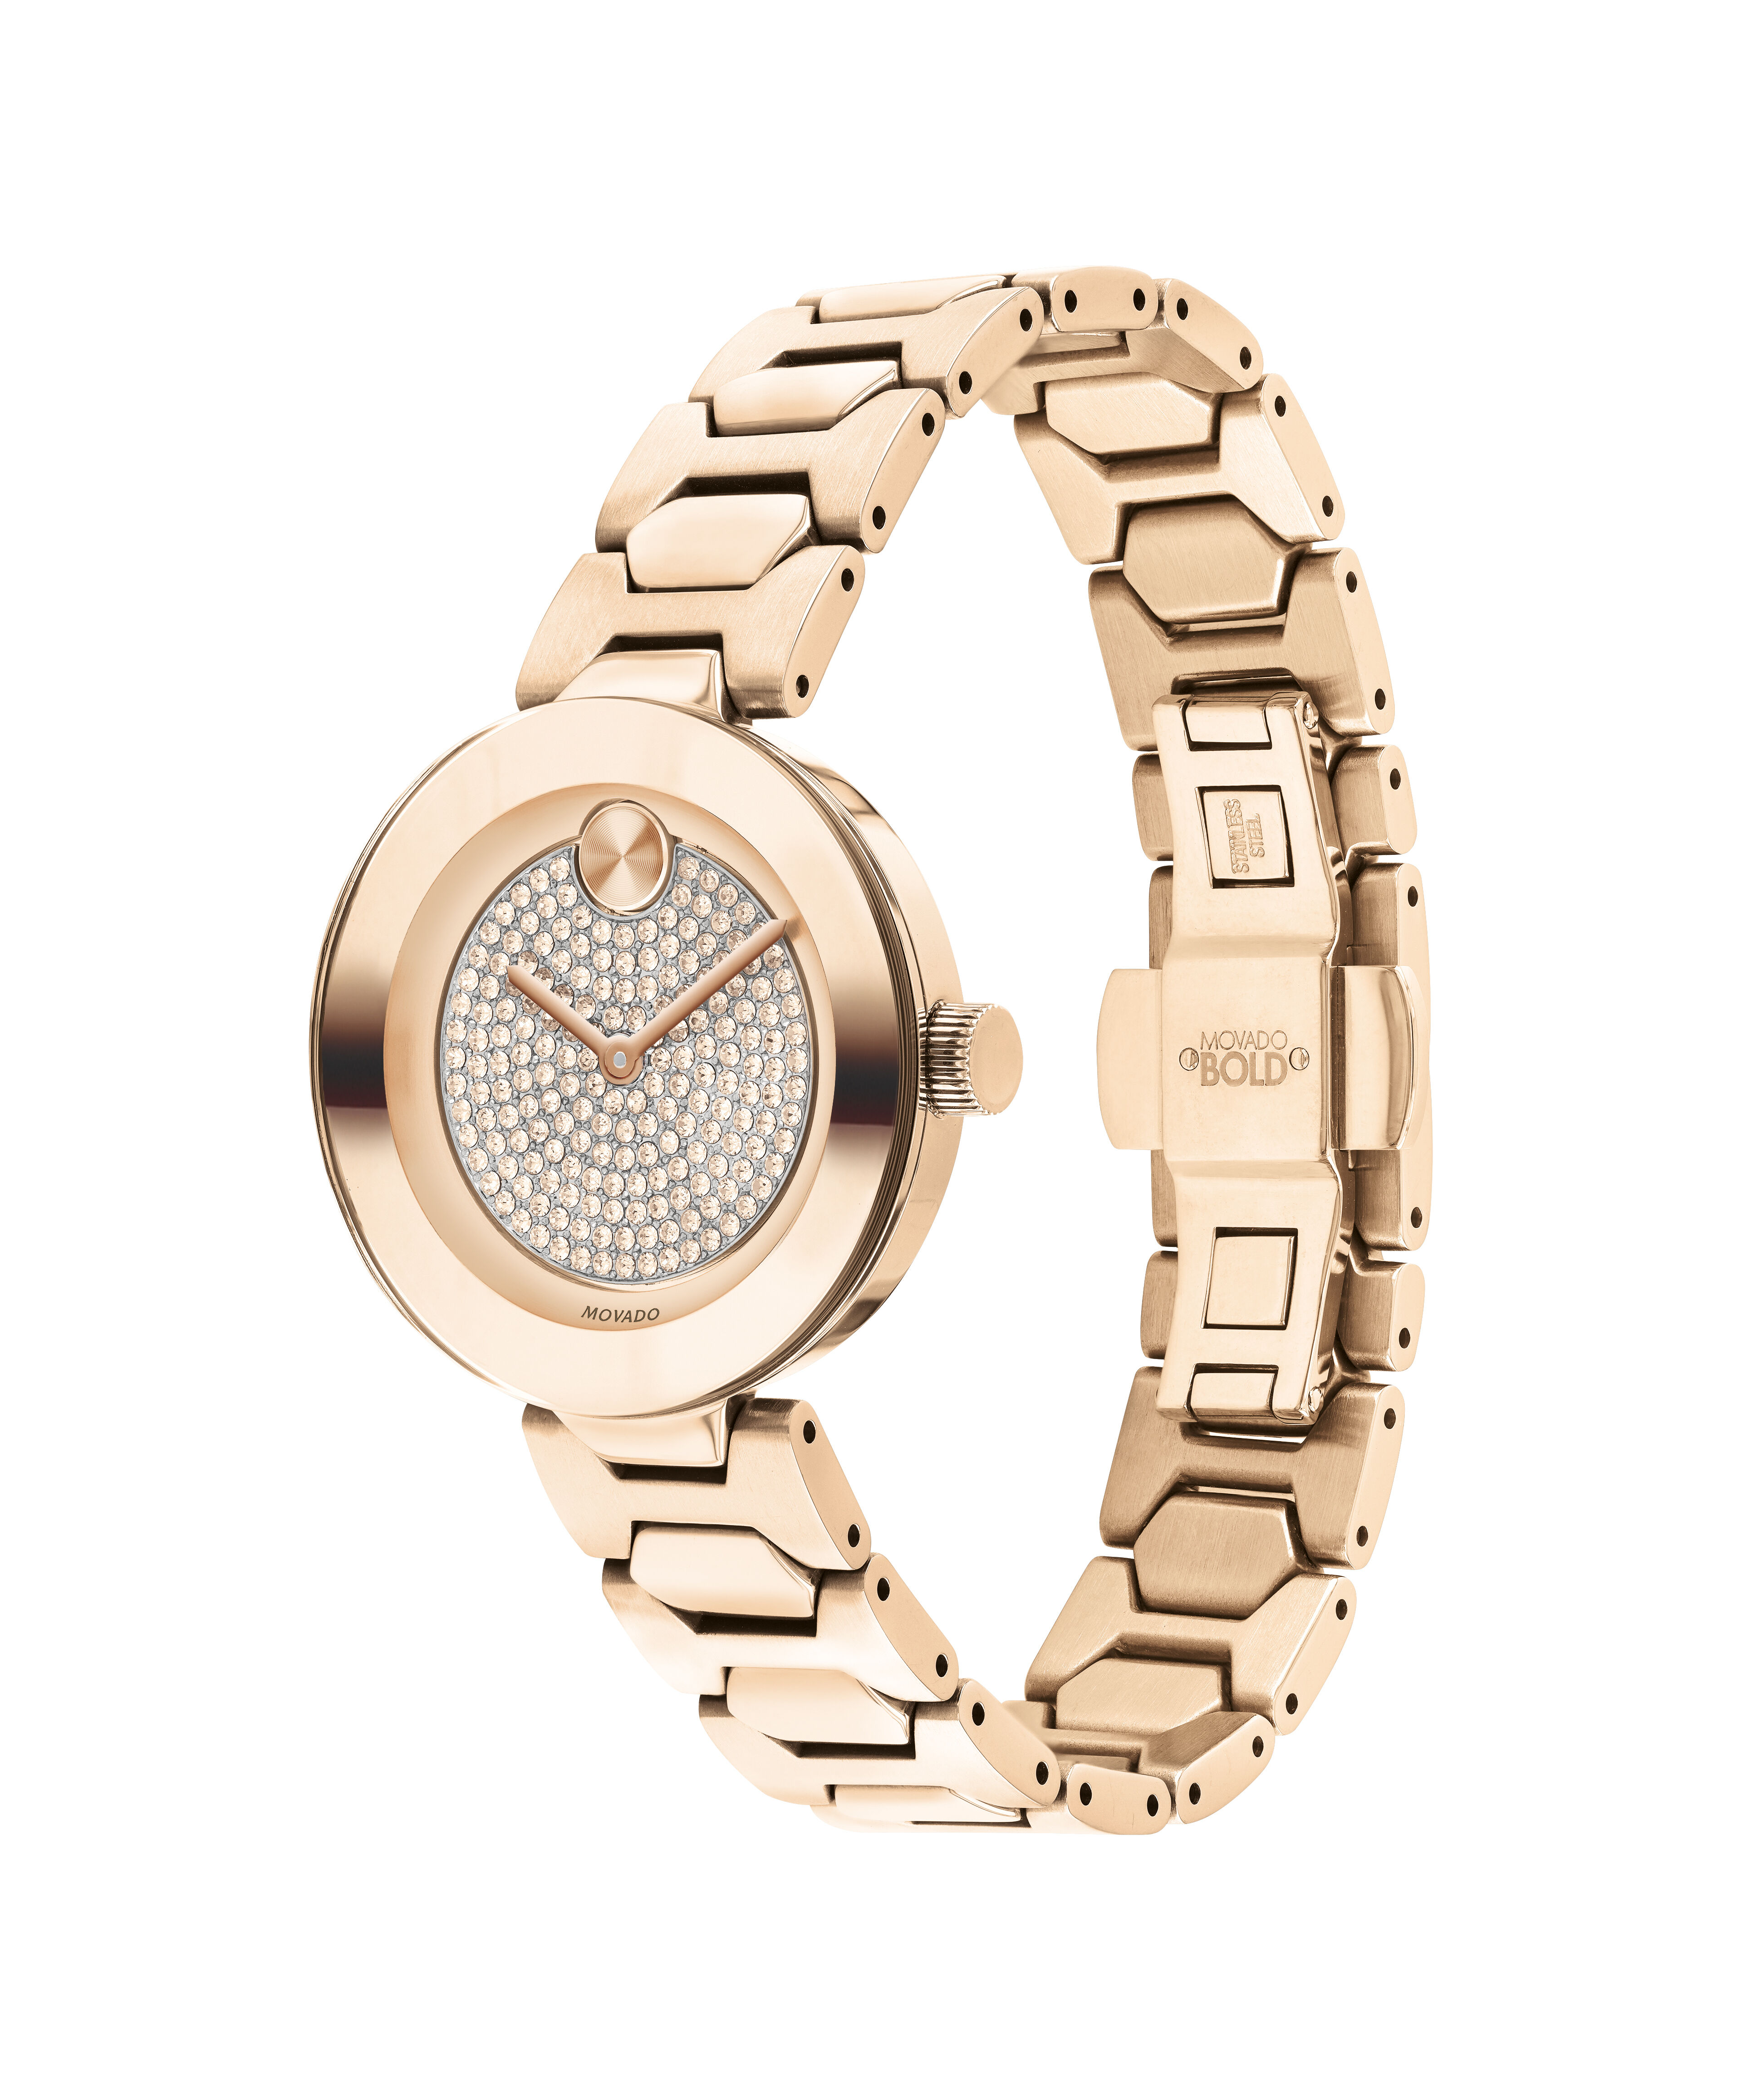 Movado Bold Quartz Rose Gold Dial Ladies Watch